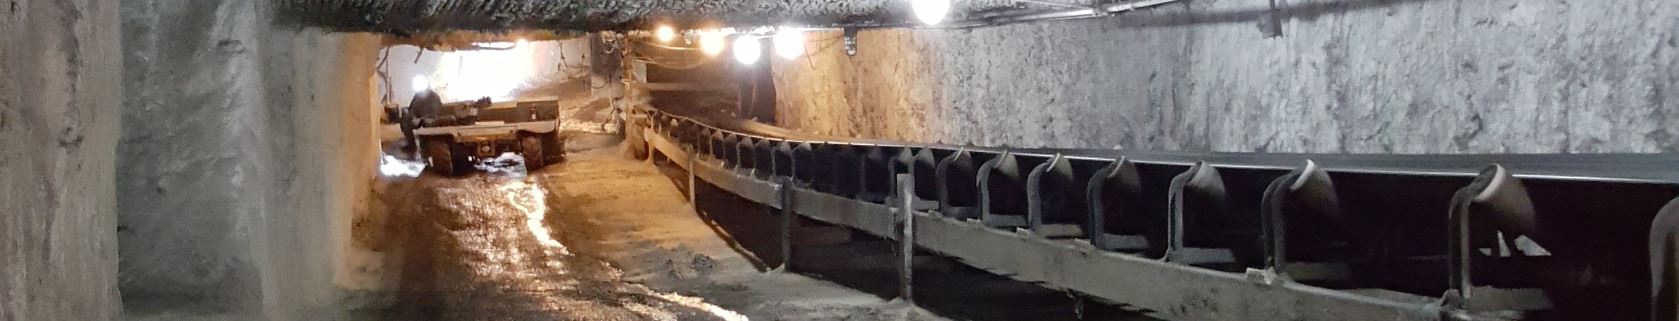 Inside of a coal mine